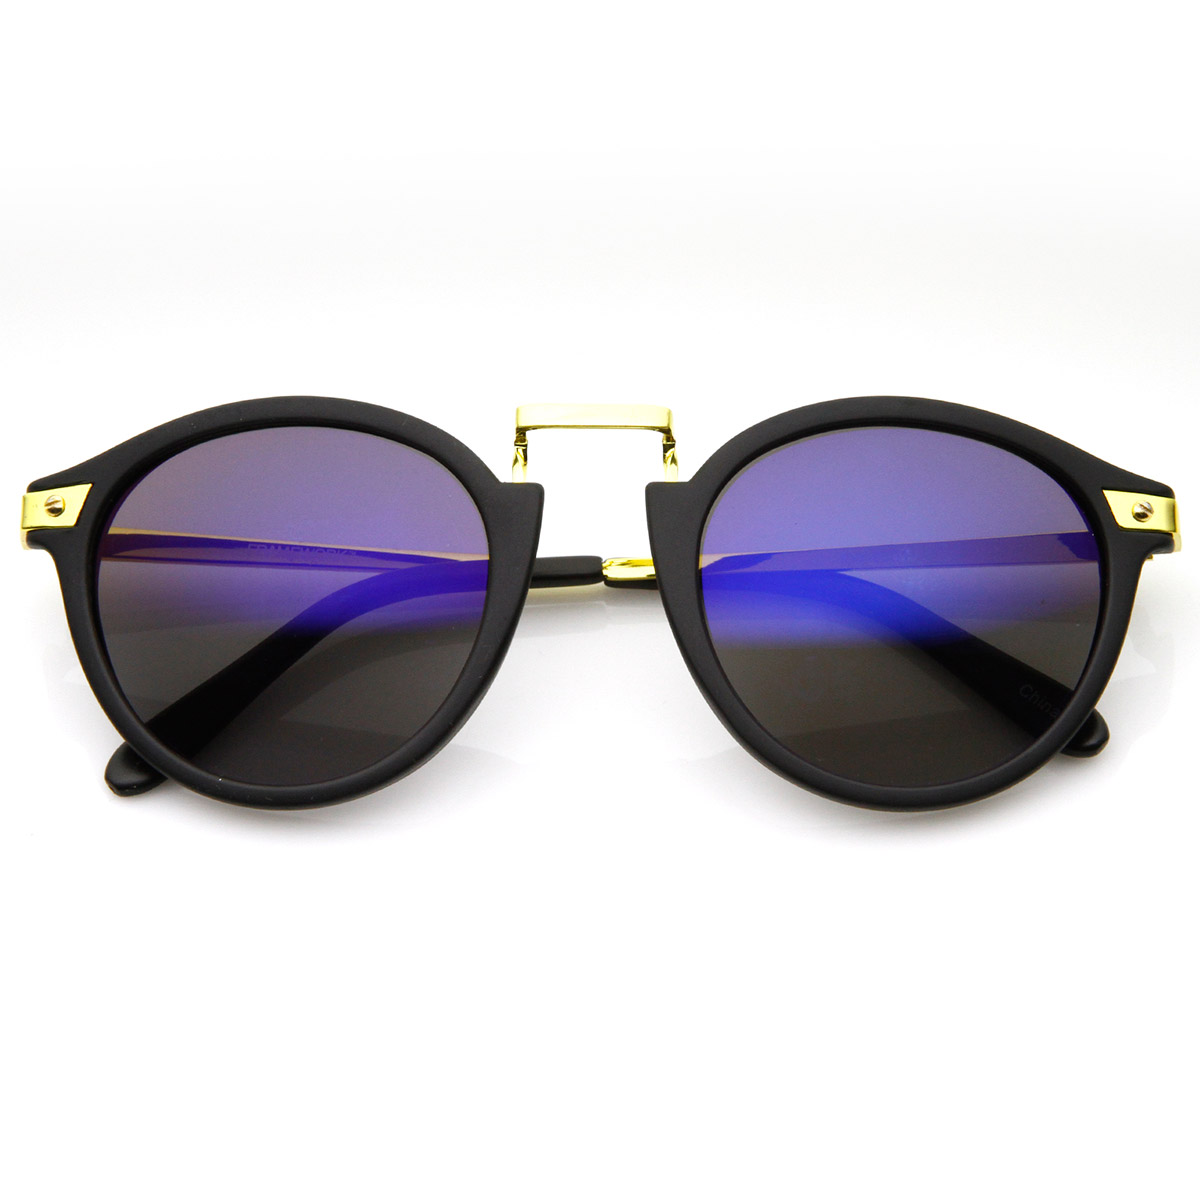 Vintage Inspired Round Horned Rim P-3 Frame Retro Sunglasses